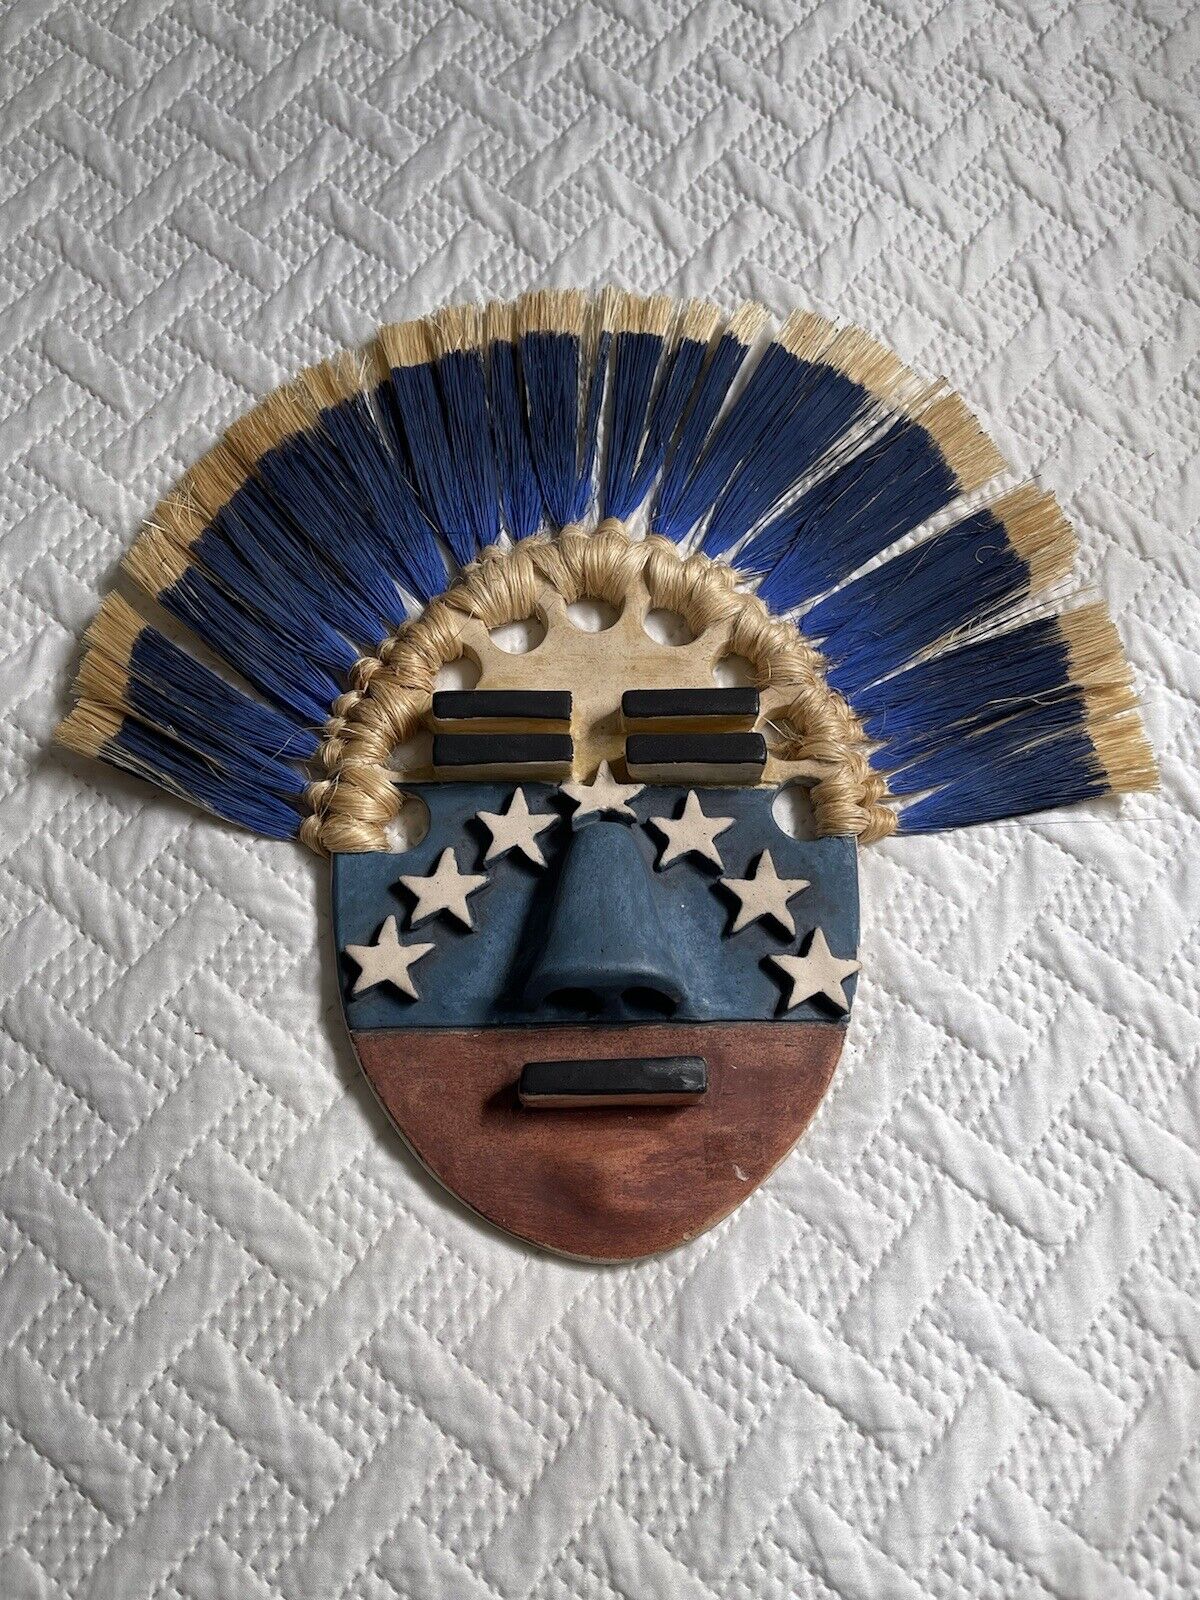 clay mask Venezuelan  artist SAUL Red White Blue  Handmade